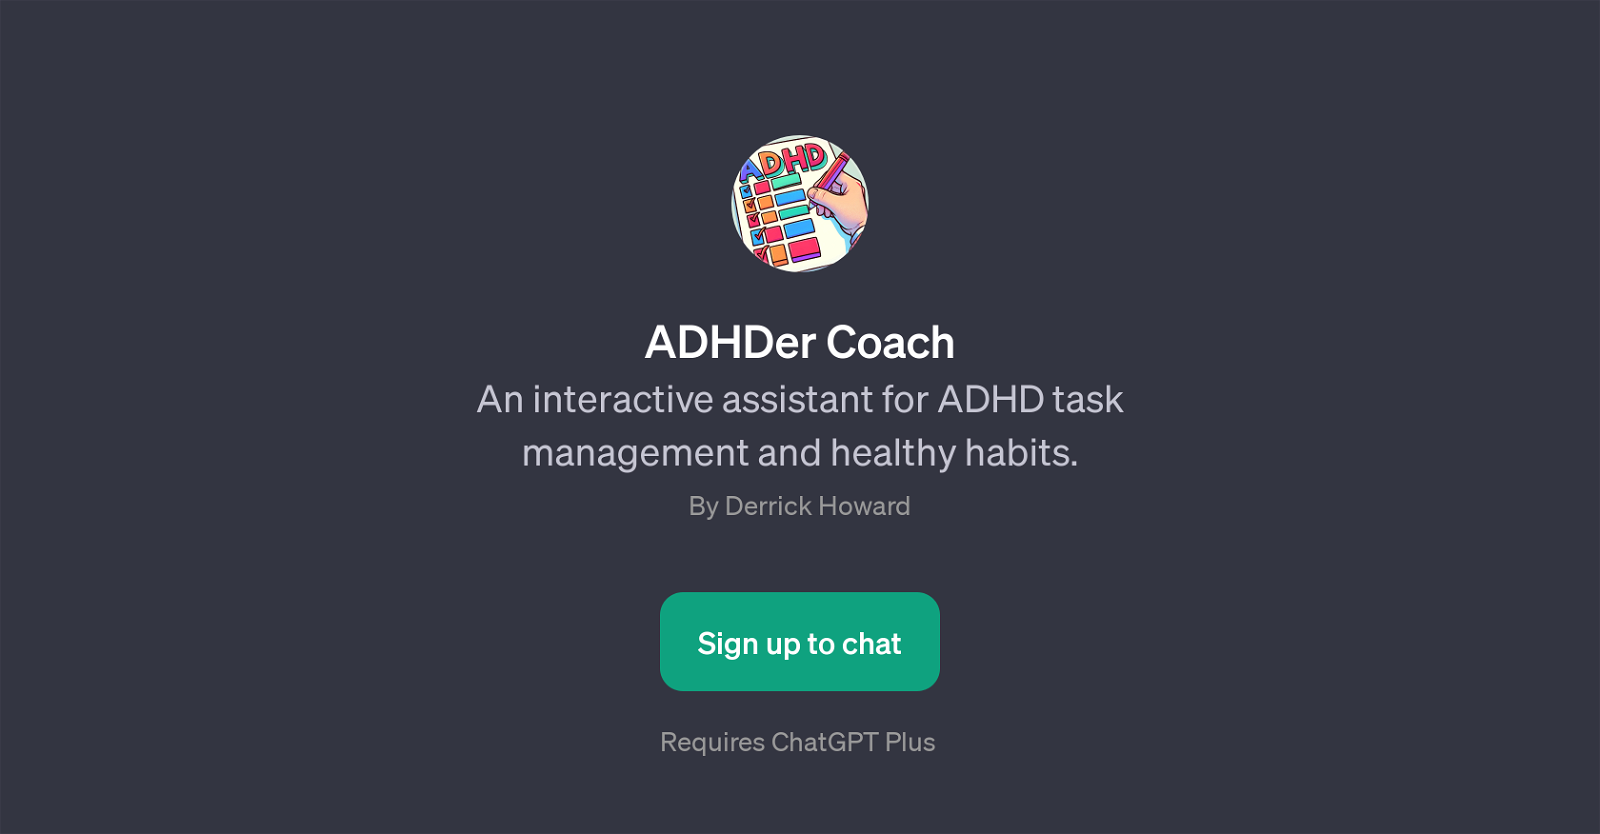 ADHDer Coach website